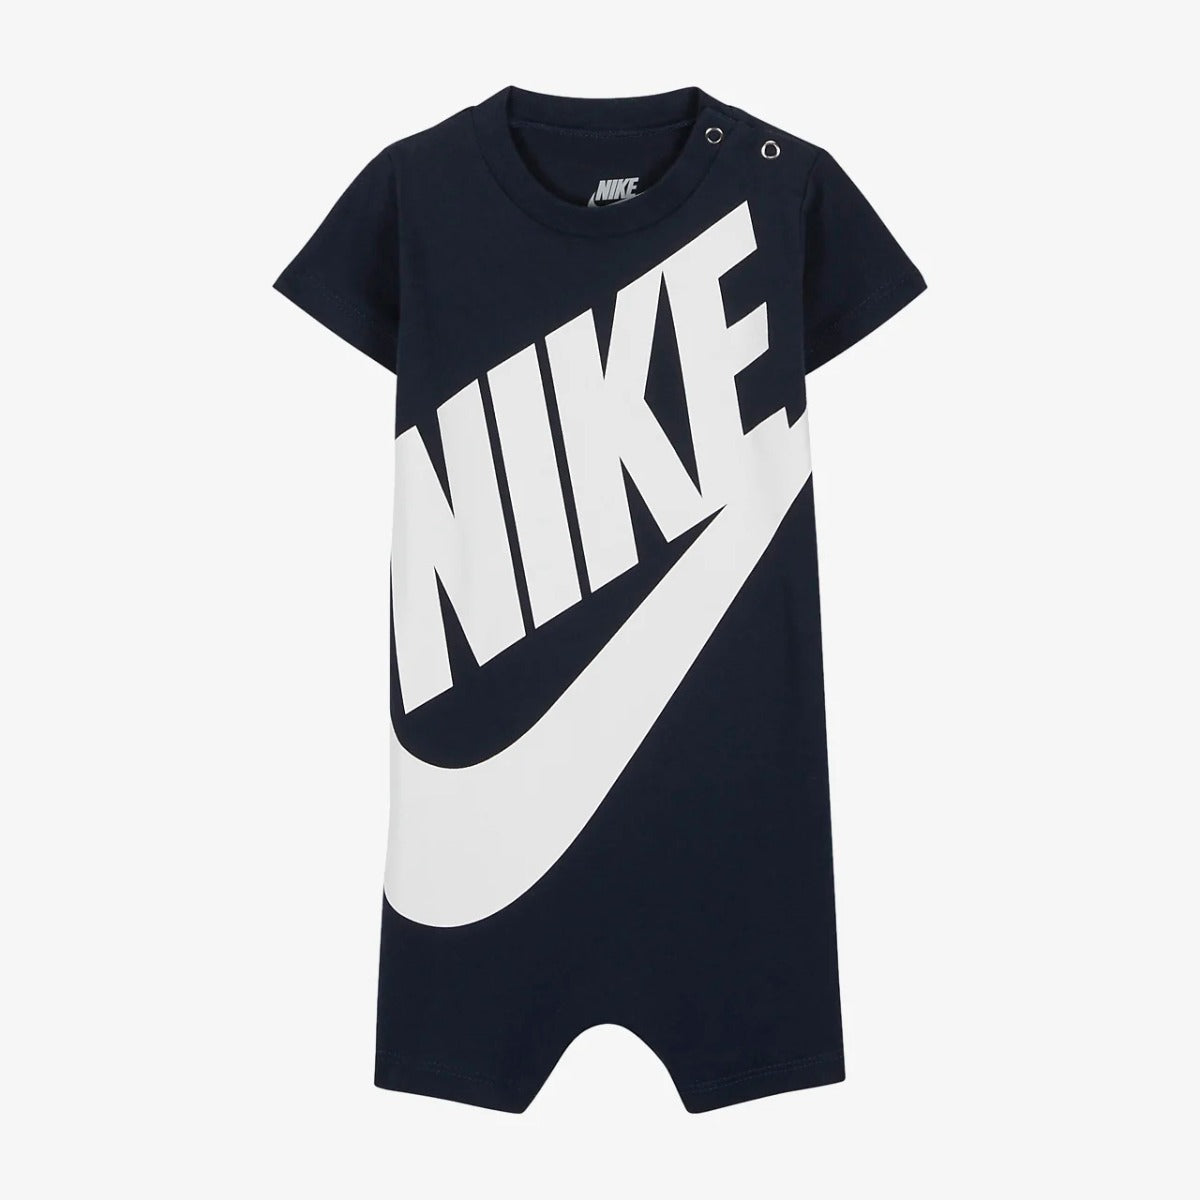 Nike Sportswear Futura Baby Romper - Black/White